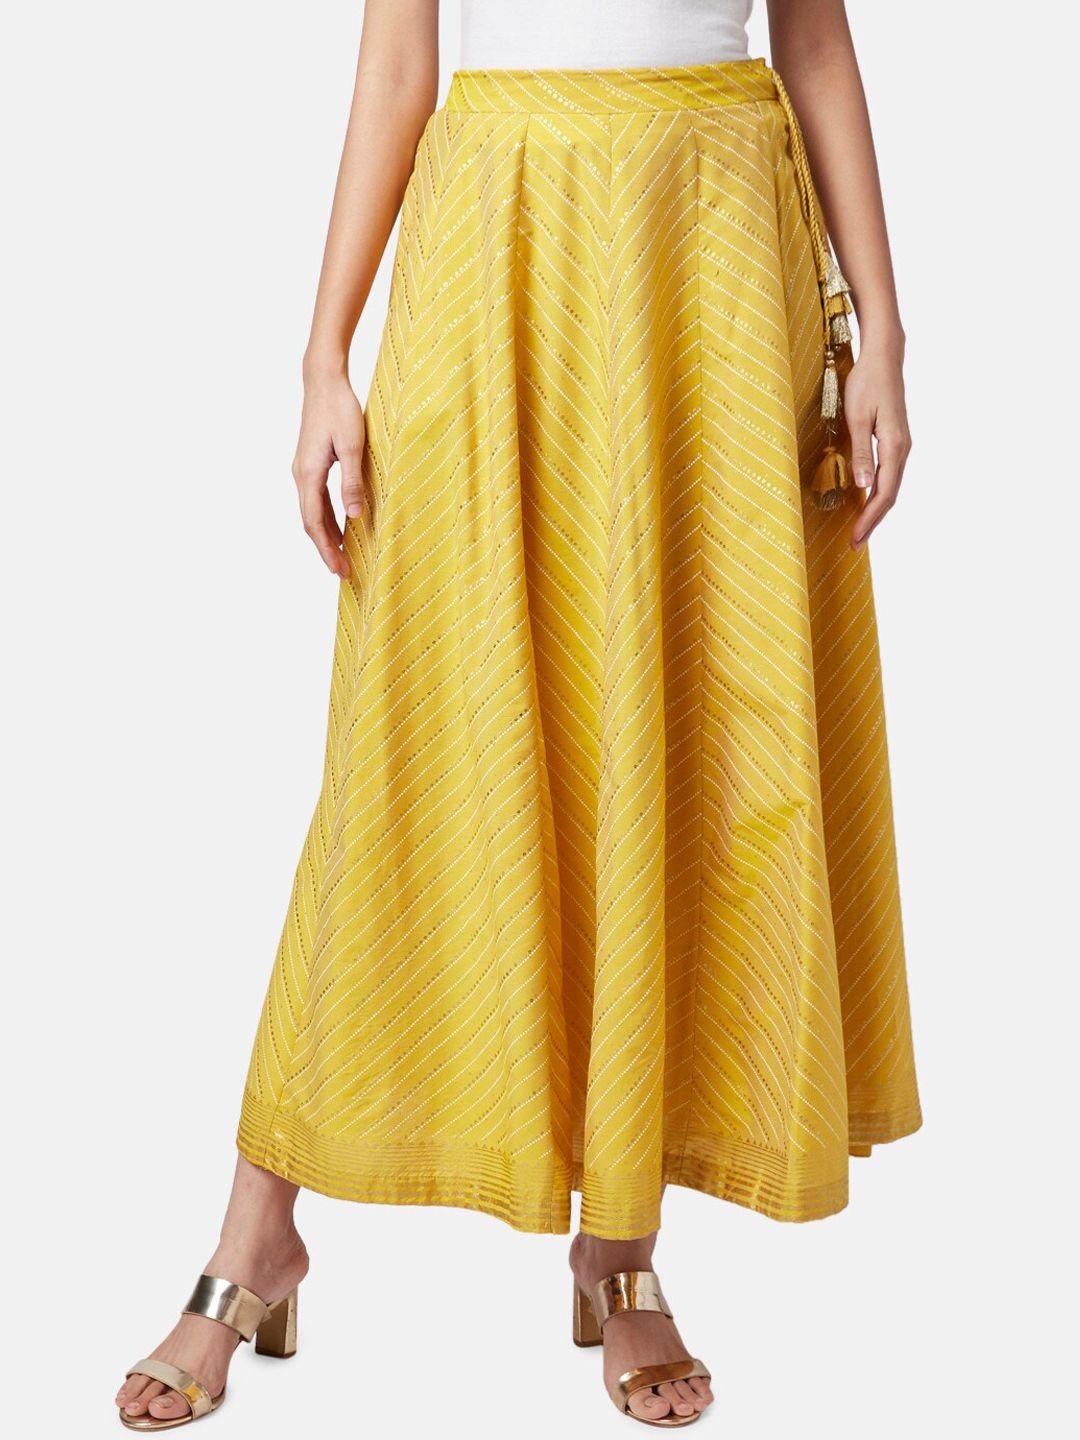 rangmanch by pantaloons women mustard yellow printed maxi skirts